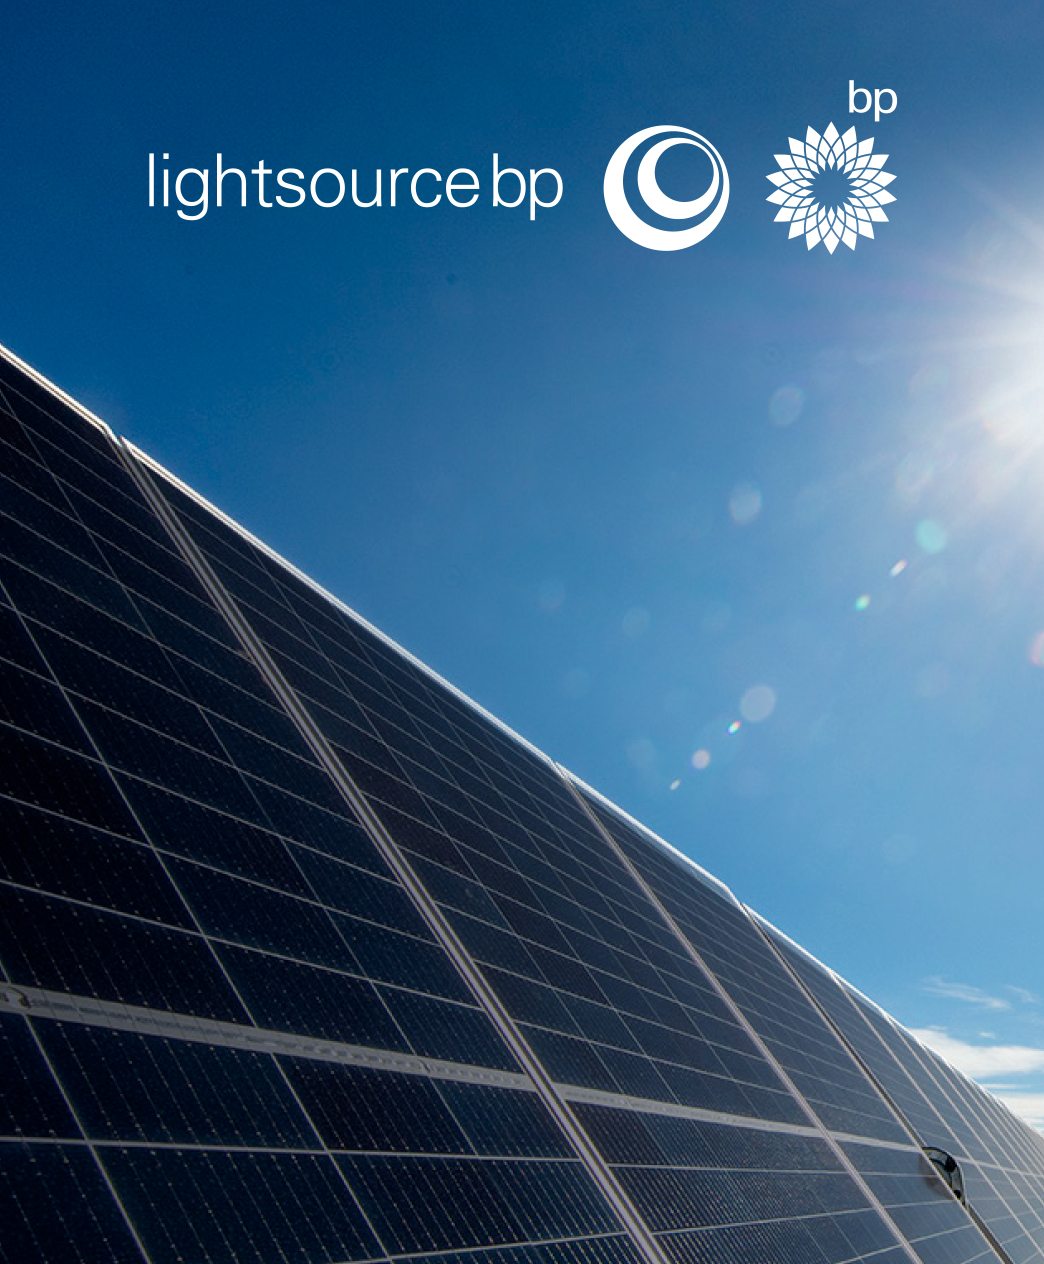 lightsource-bp-solar-panel-desktop.jpg